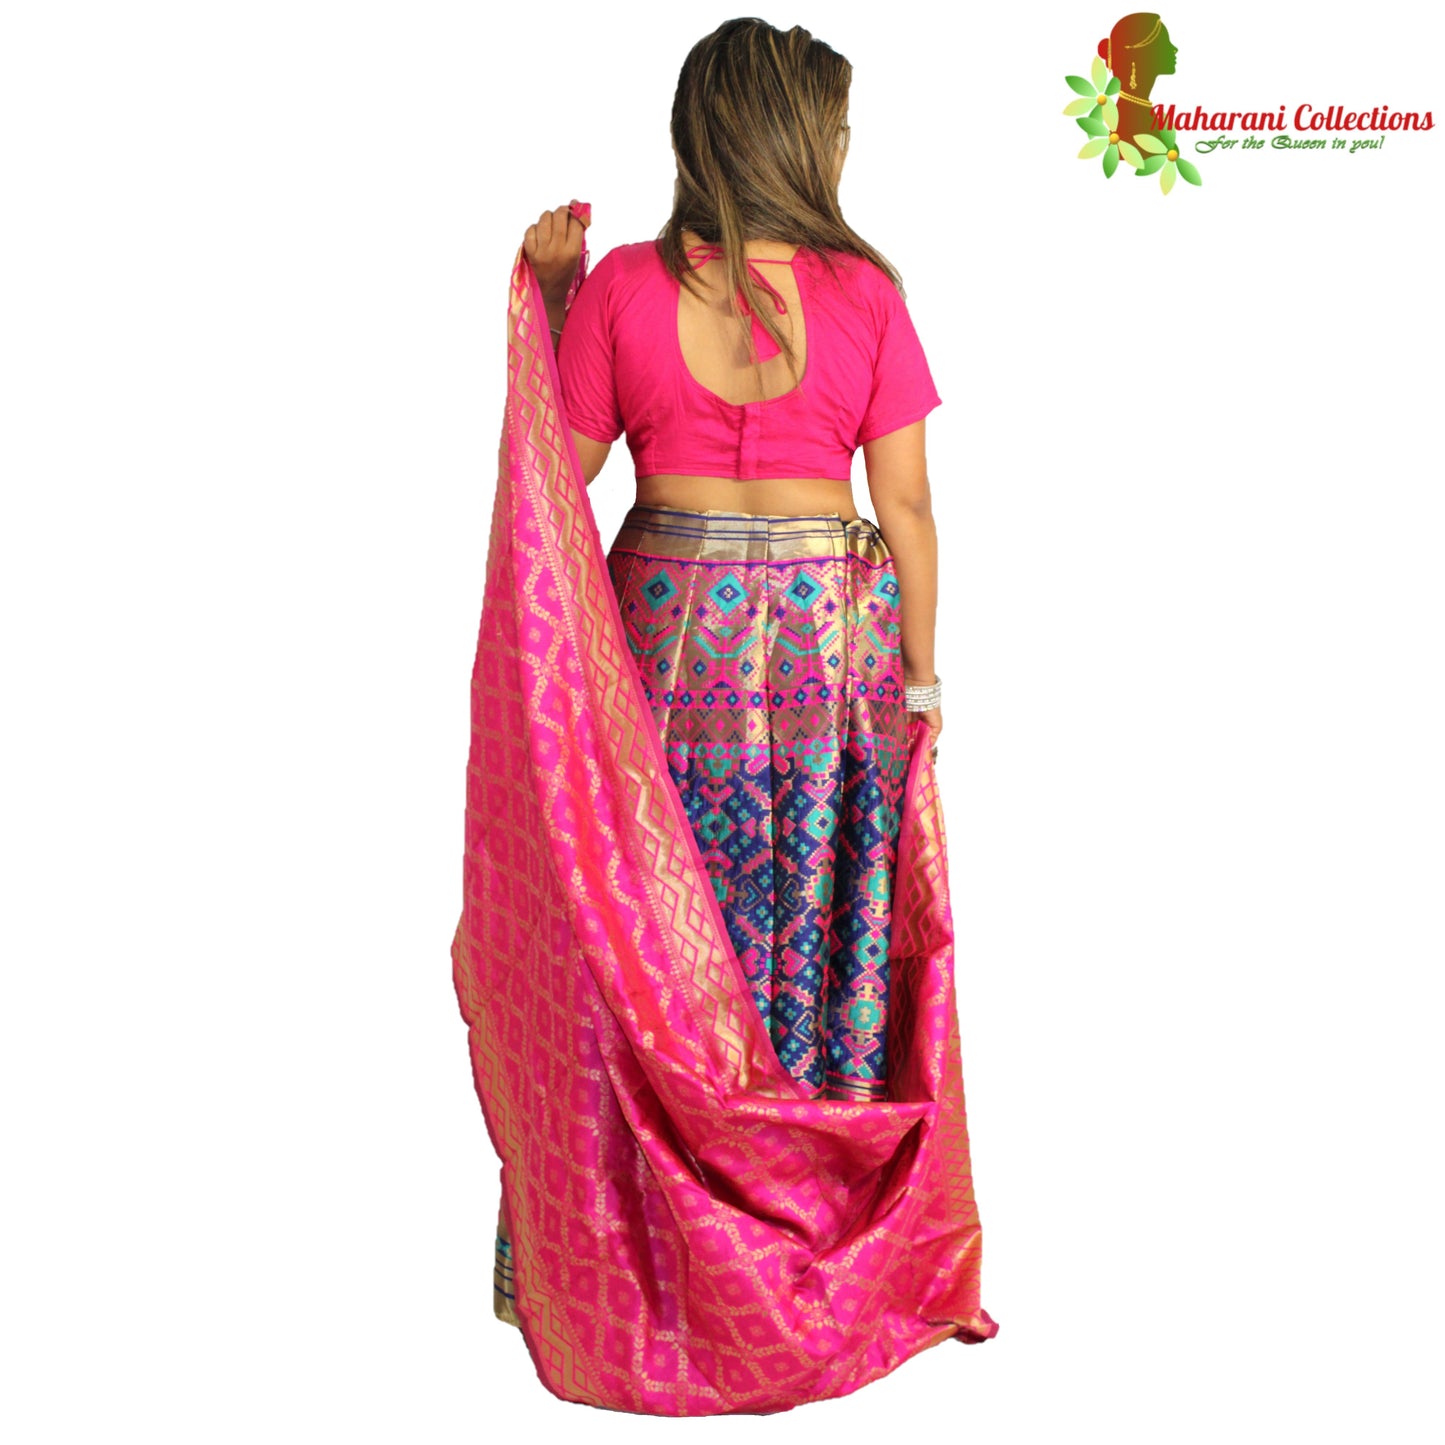 Maharani's Designer Pure Banarasi Silk Lehenga - Pink and Blue (M/L)